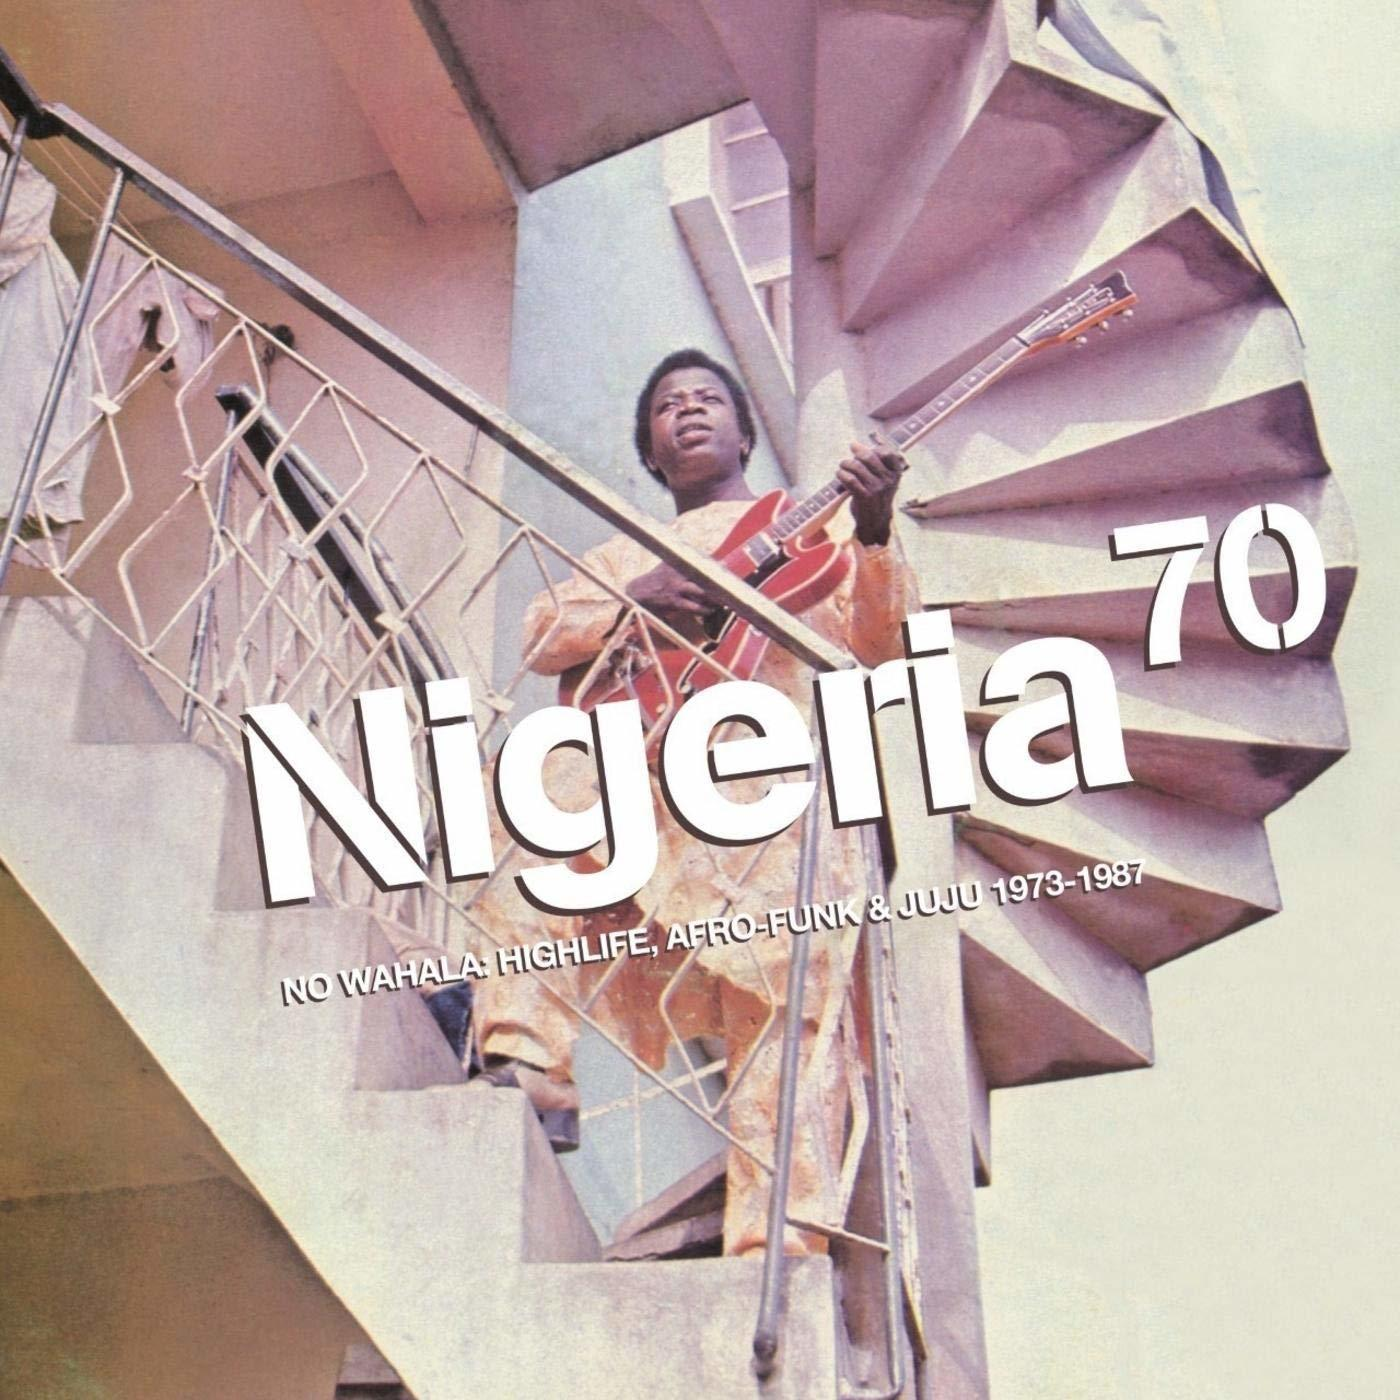 VARIOUS - Nigeria 70: Wahala No (1973-1987) (Vinyl) 